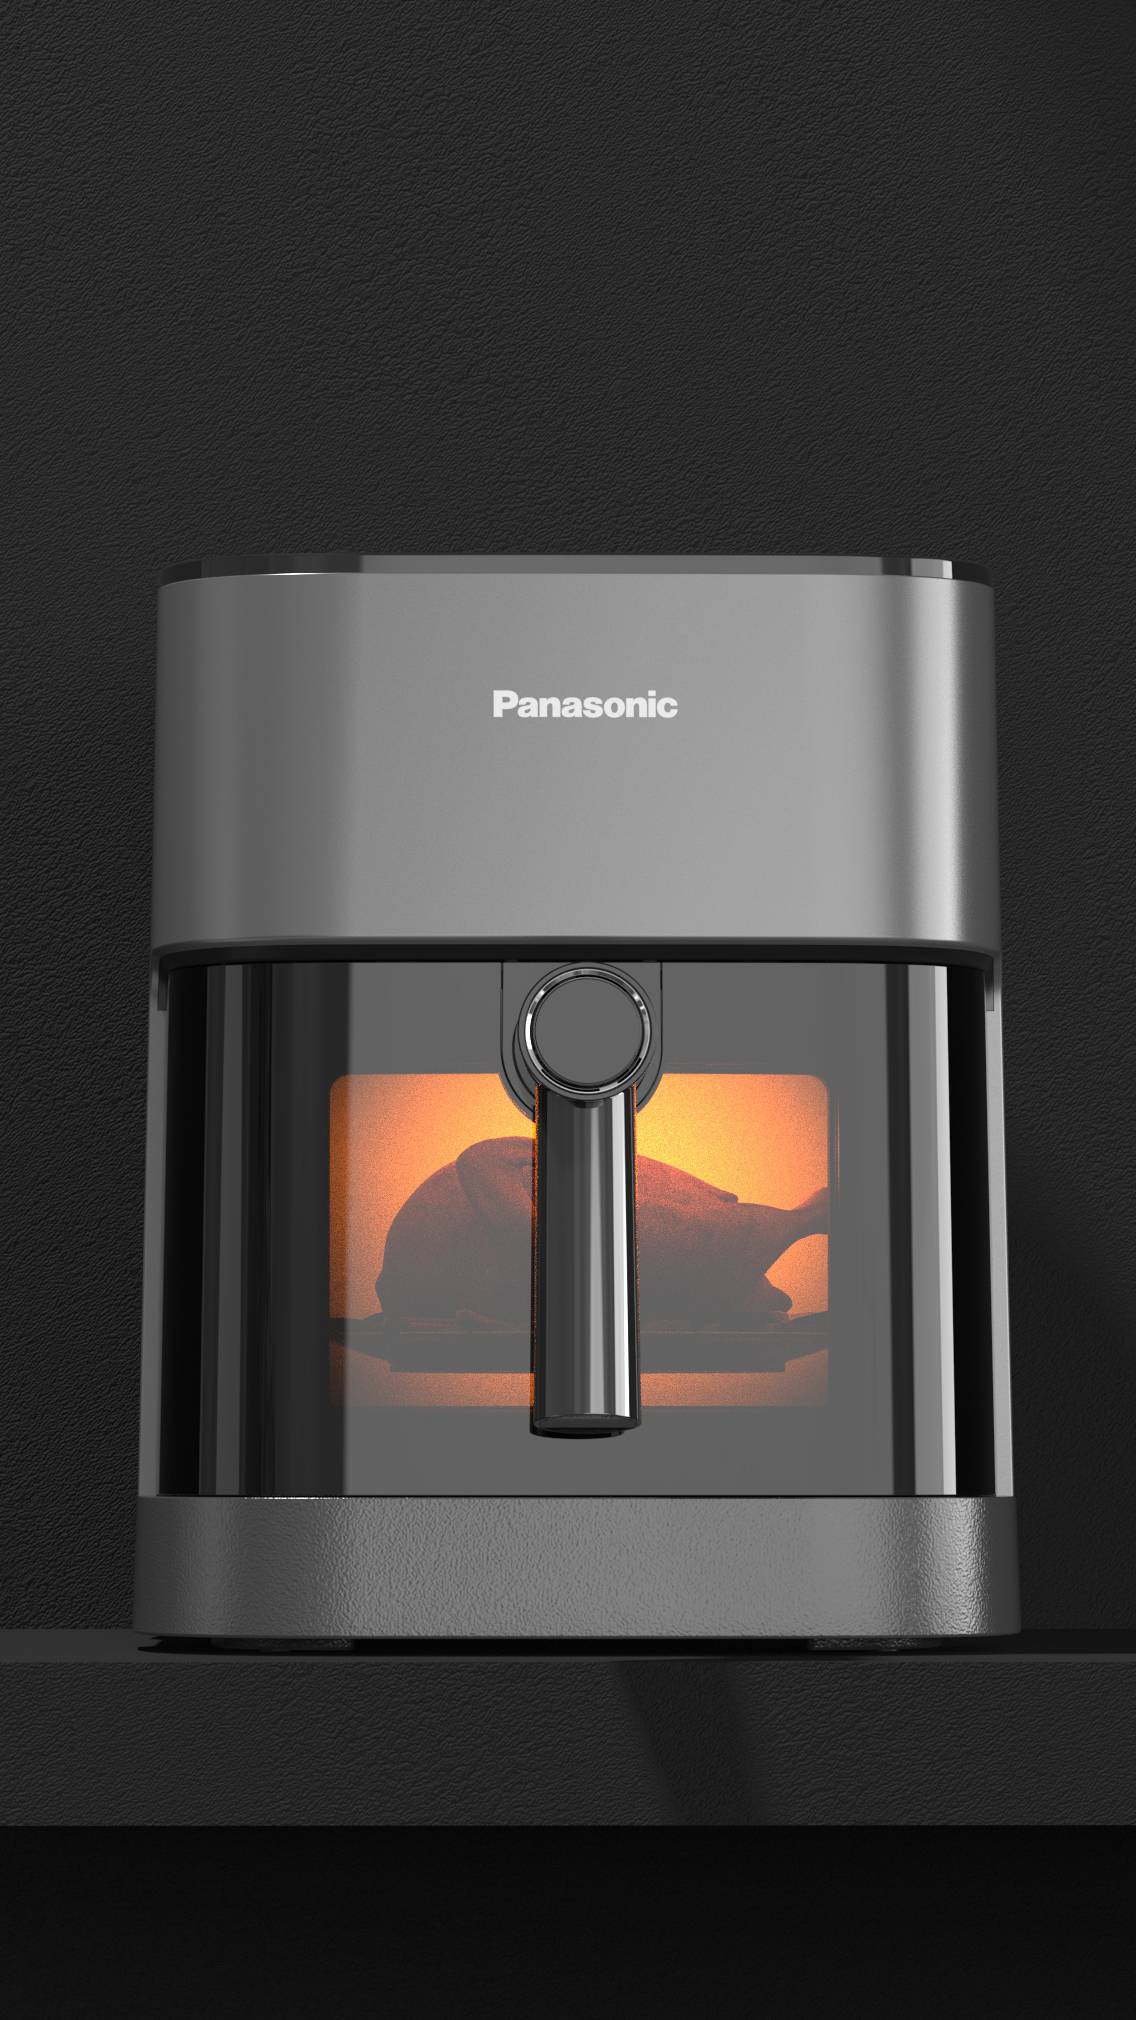 Panasonic air fryer hc500